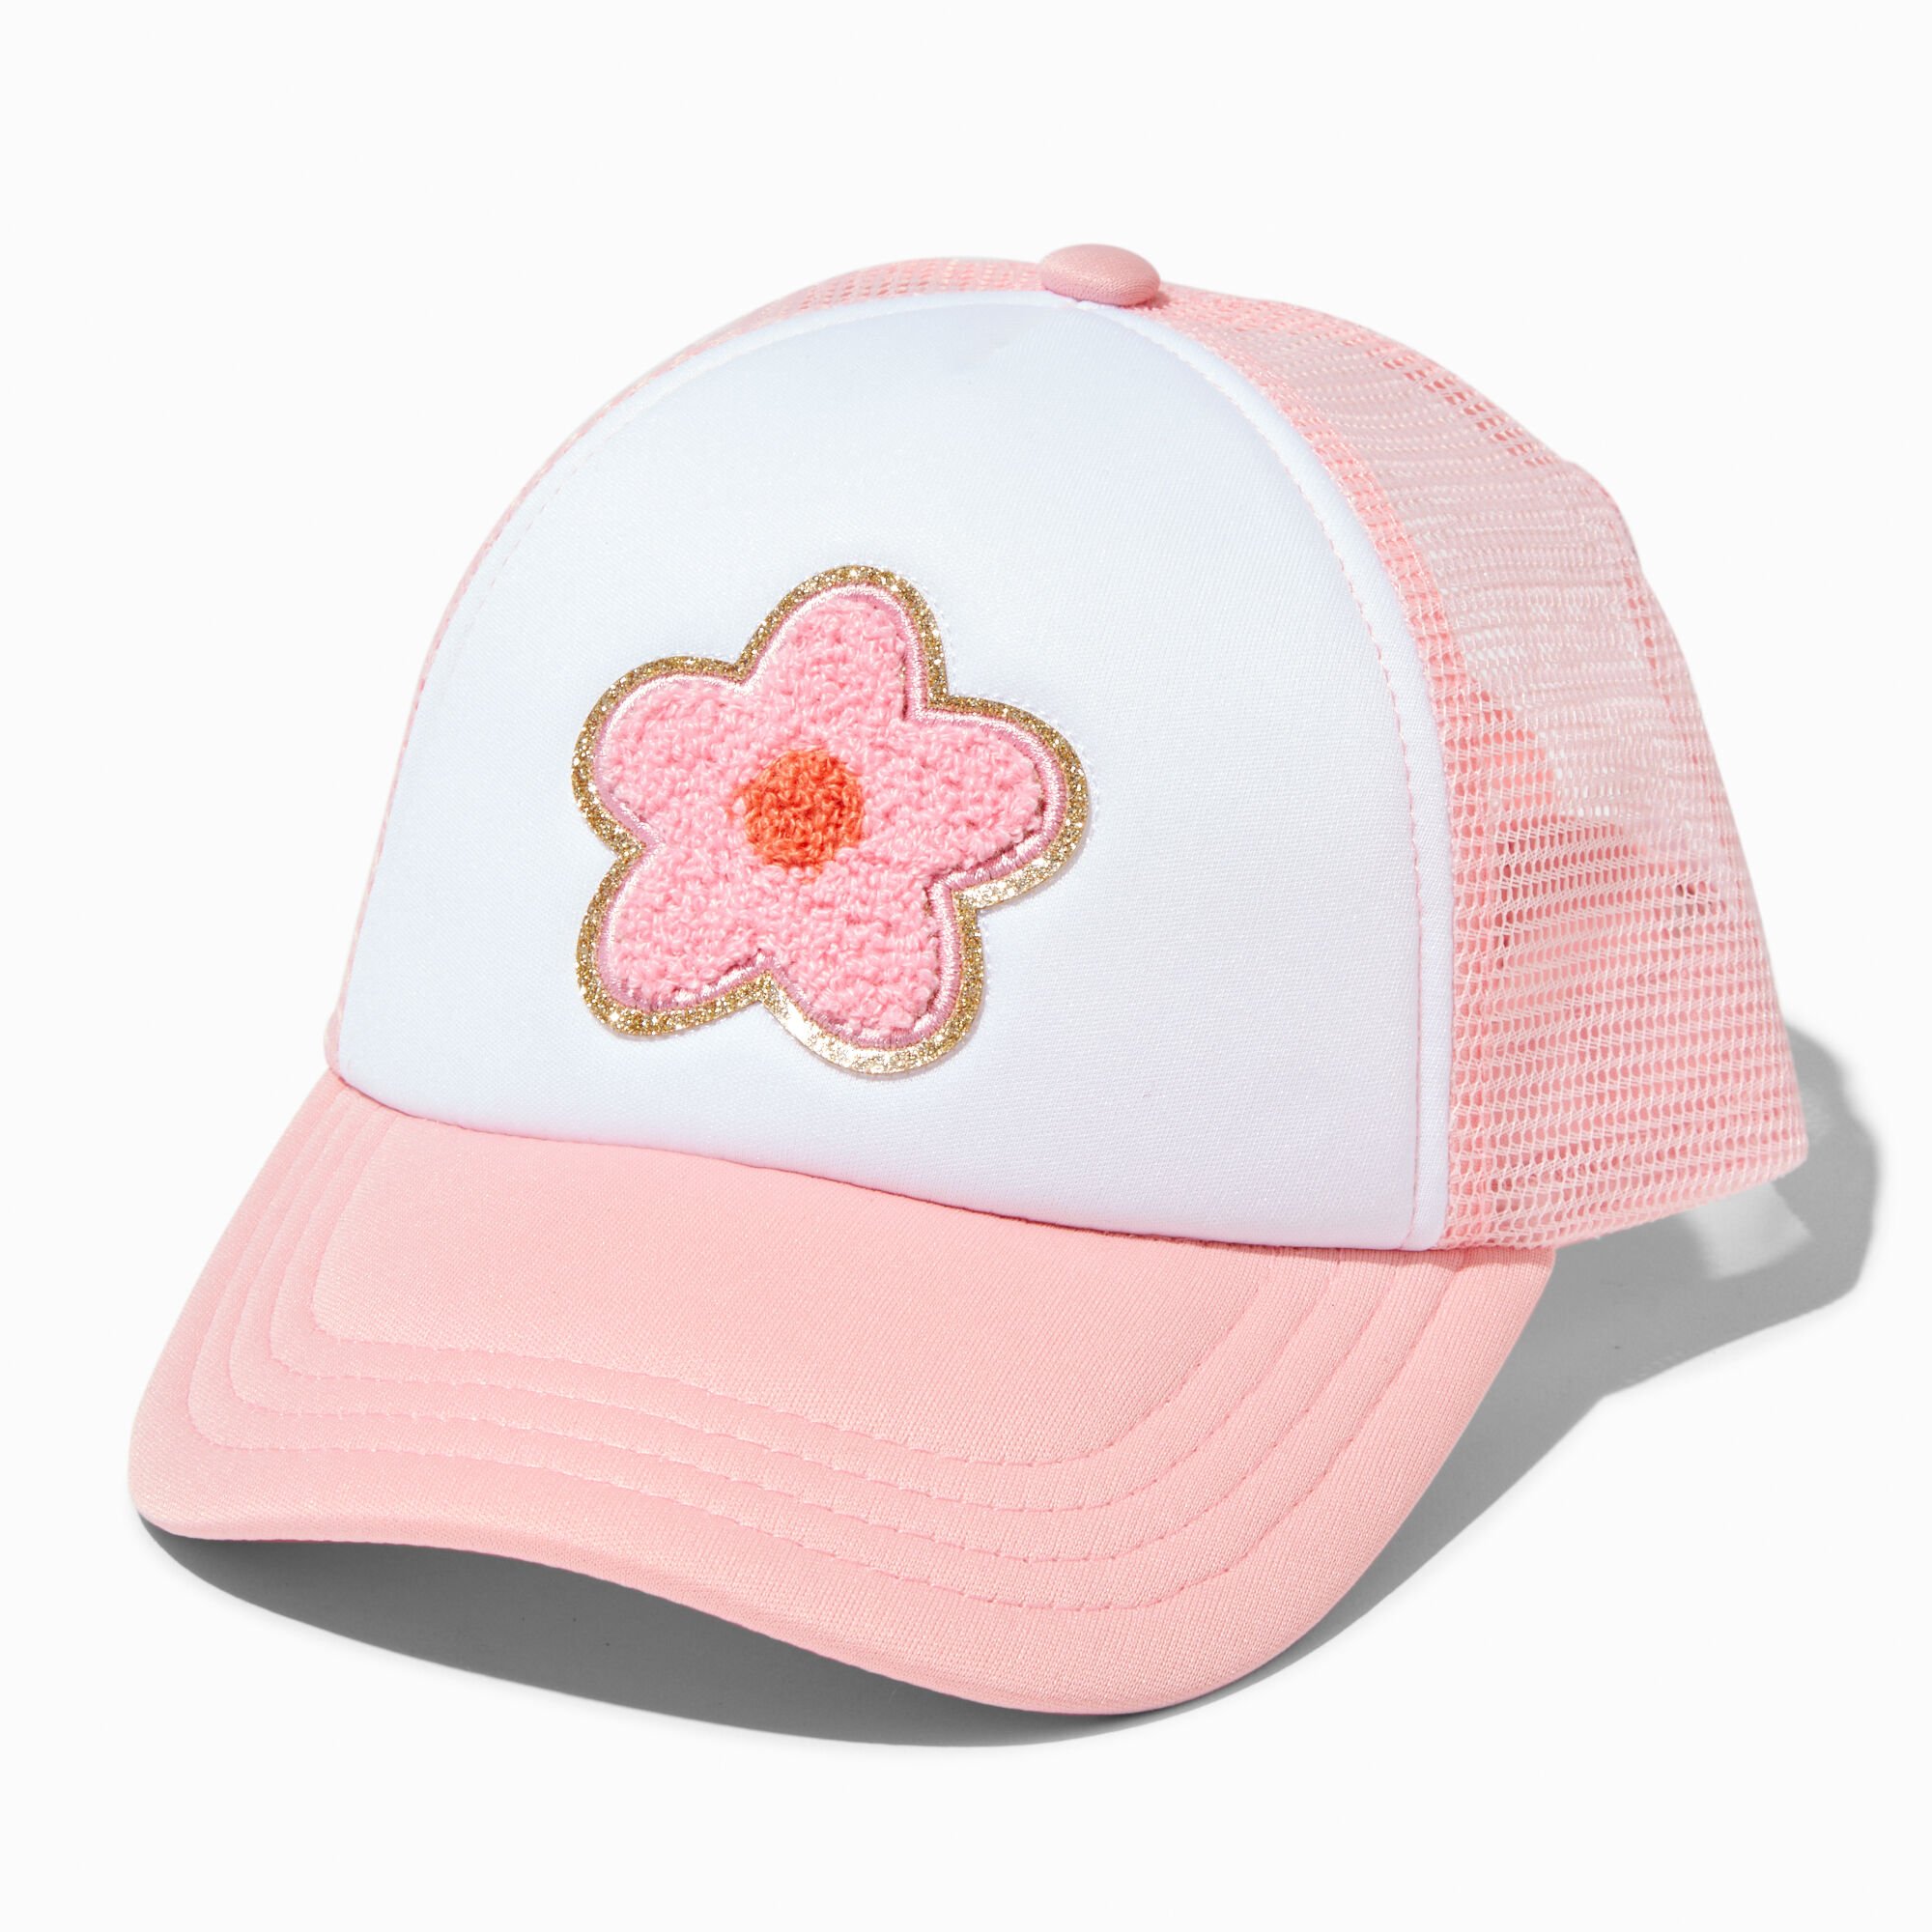 View Claires Club Flower Trucker Hat Pink information